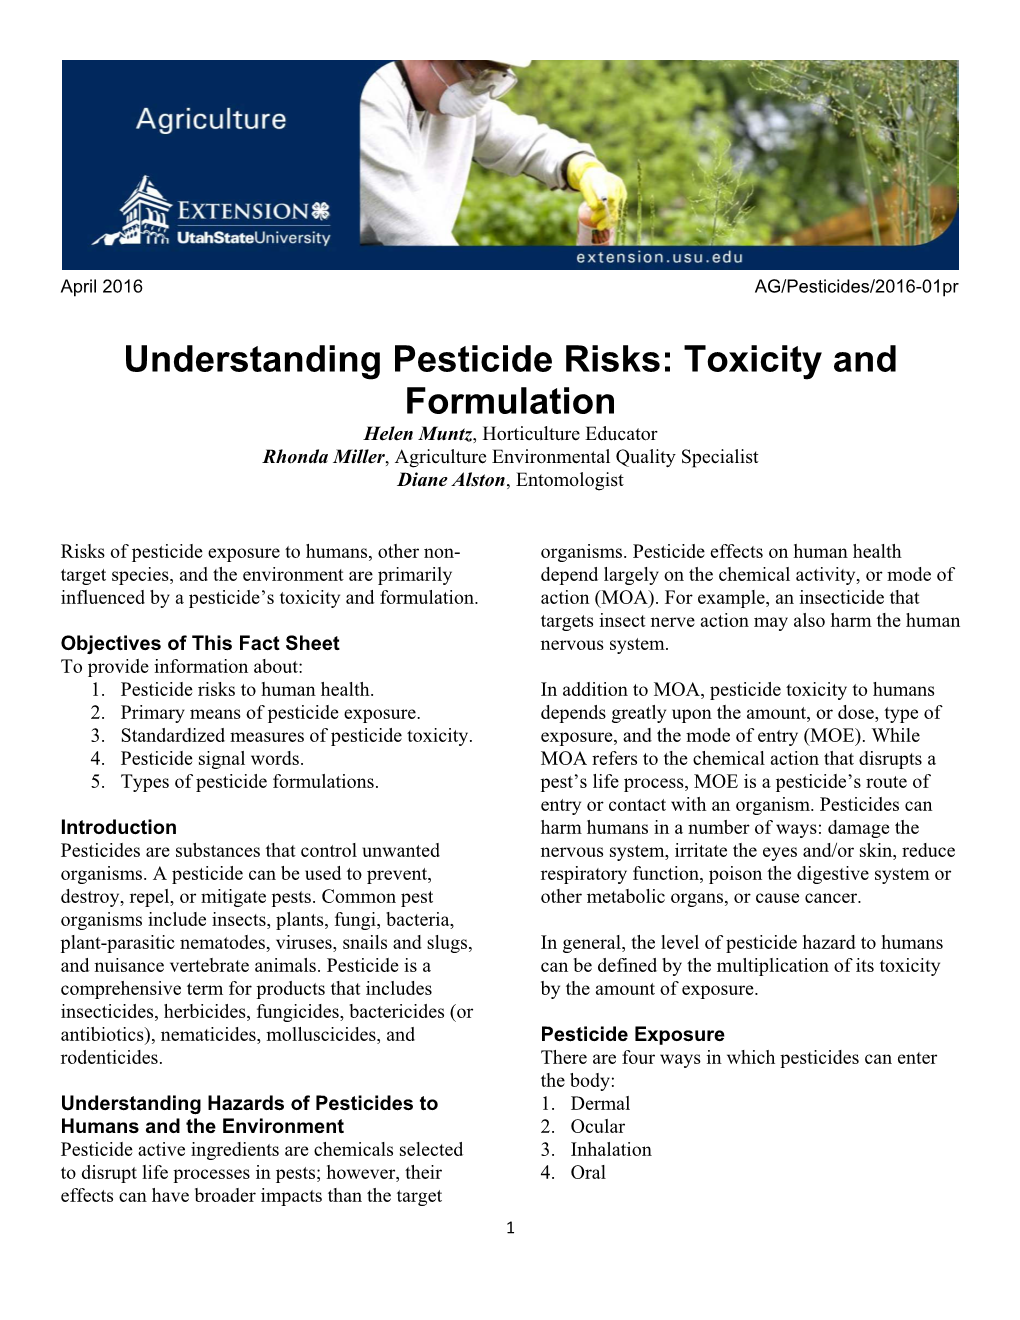 Understanding Pesticide Risks: Toxicity and Formulation